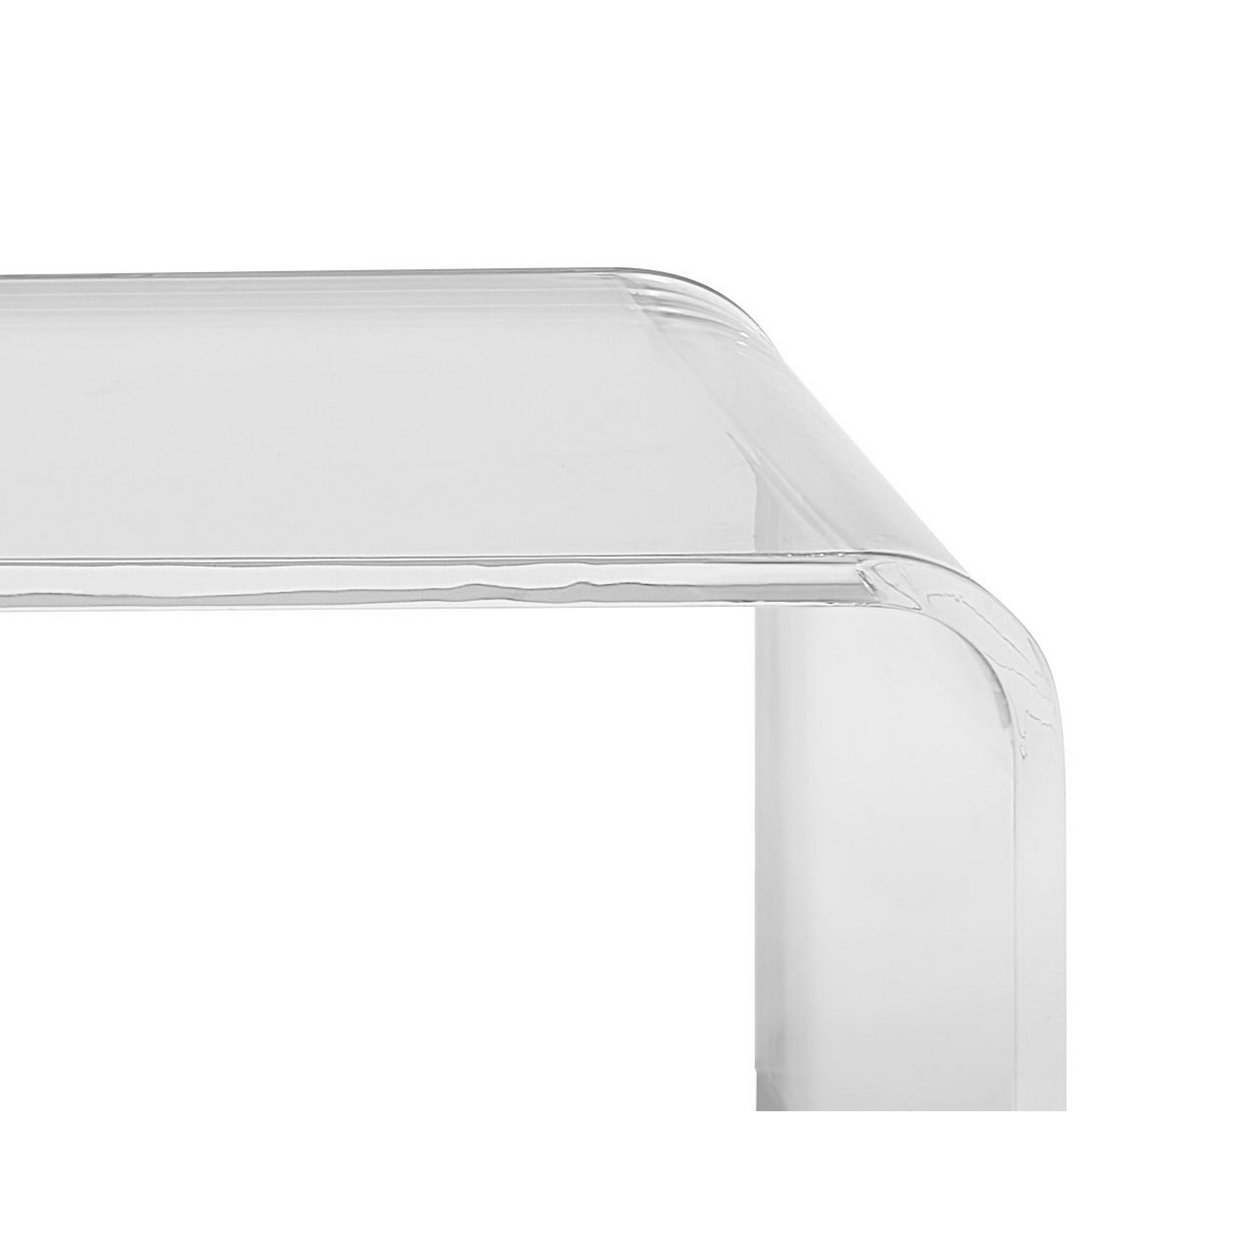 Axa 48 Inch Modern Coffee Table, U Shaped Clear Acrylic Frame, Steel Feet- Saltoro Sherpi